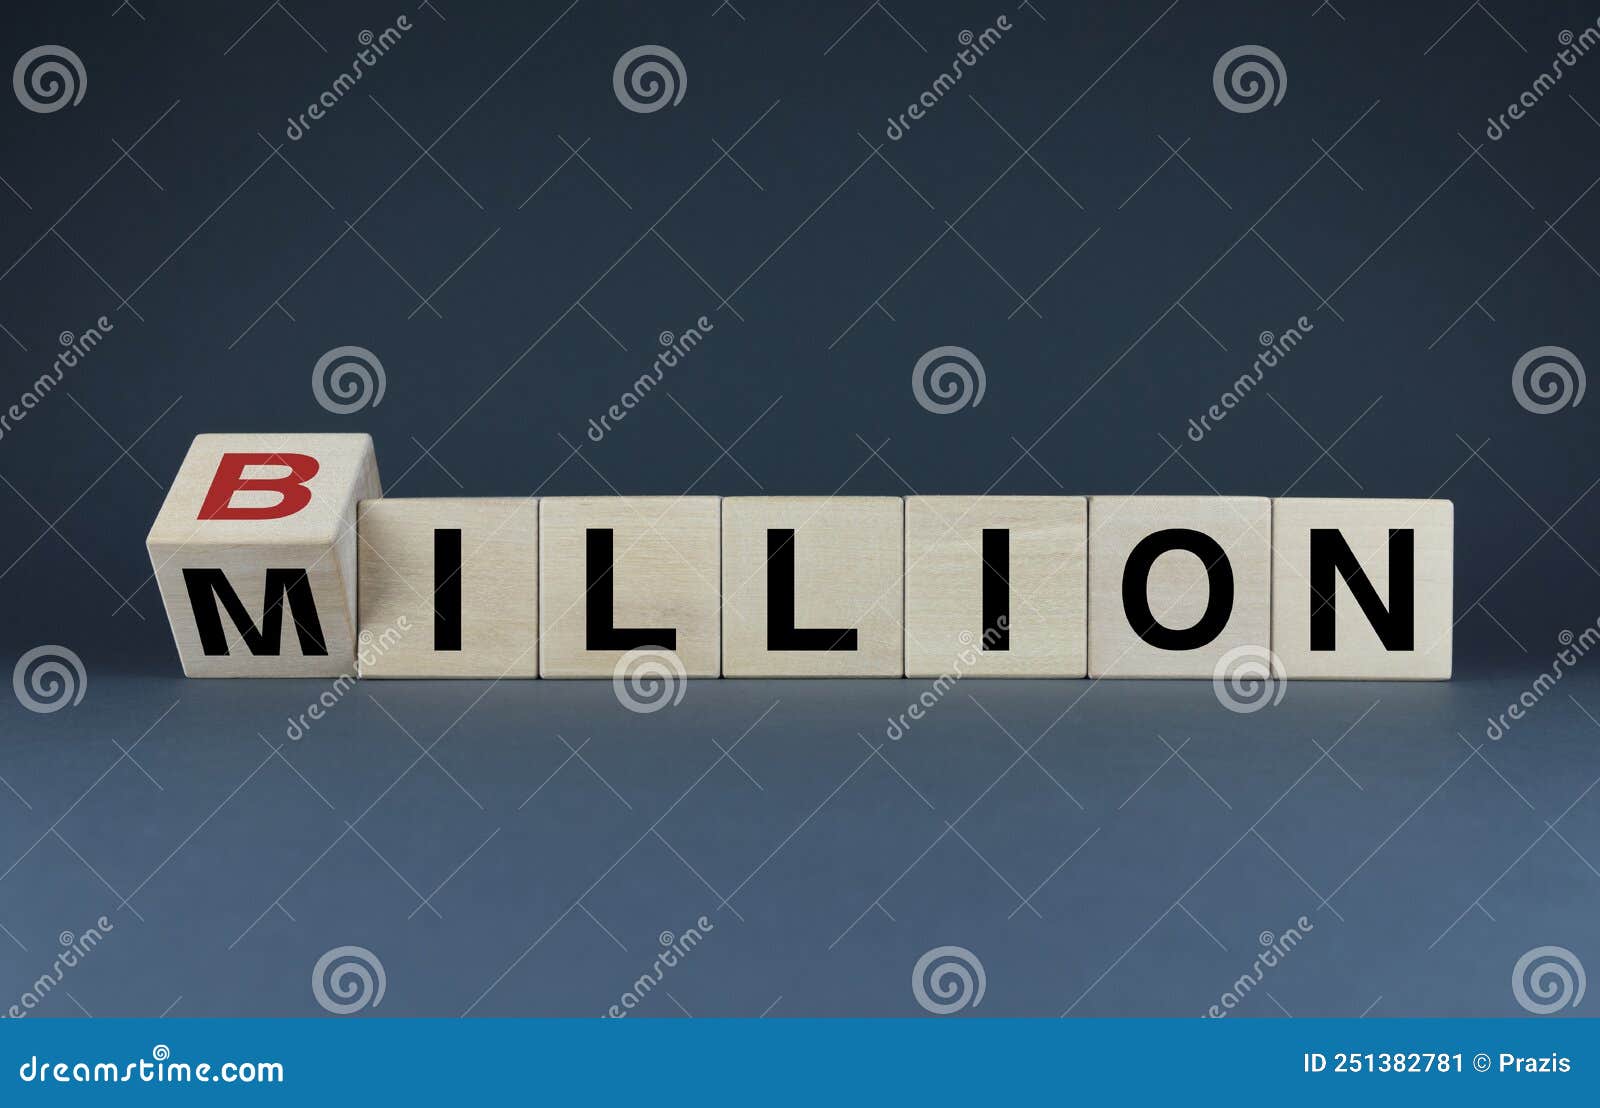 million or billion. cubes form words - million or billion